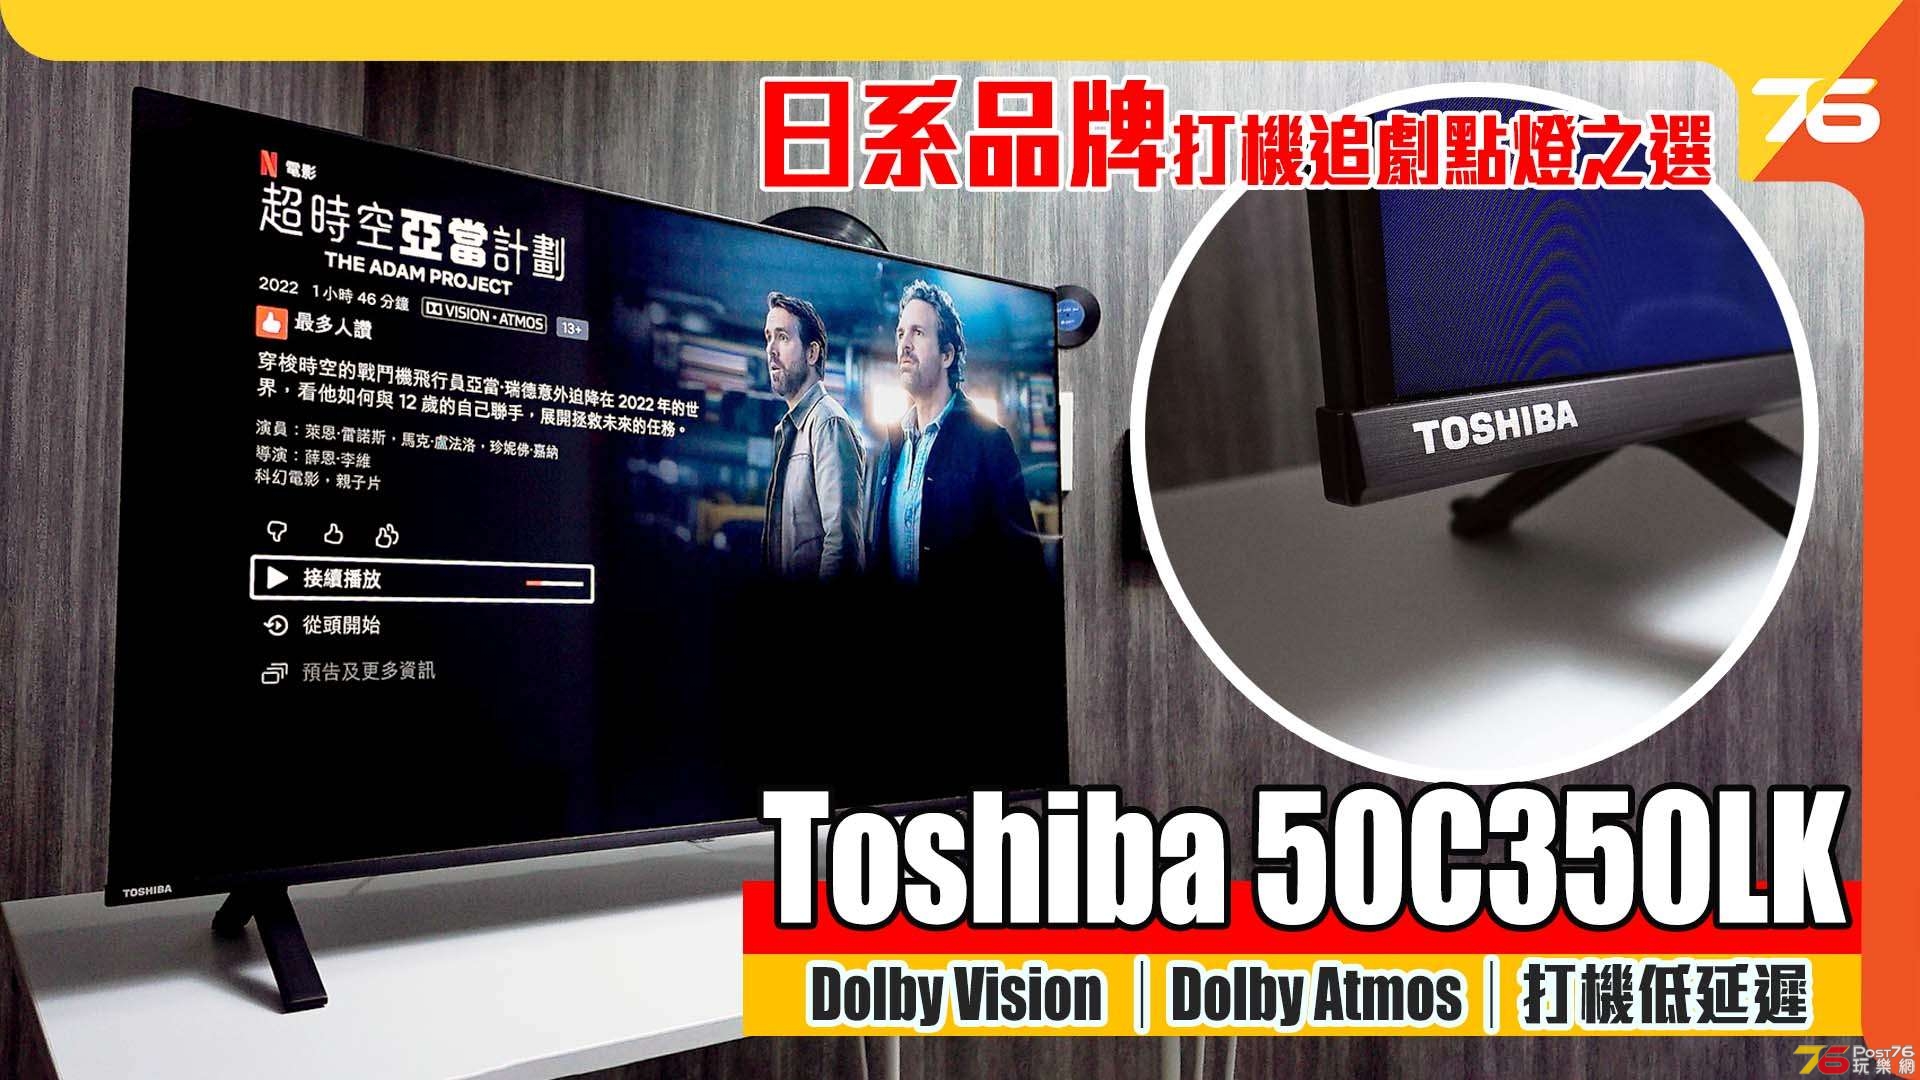 Toshiba_50C350LK_review.jpg